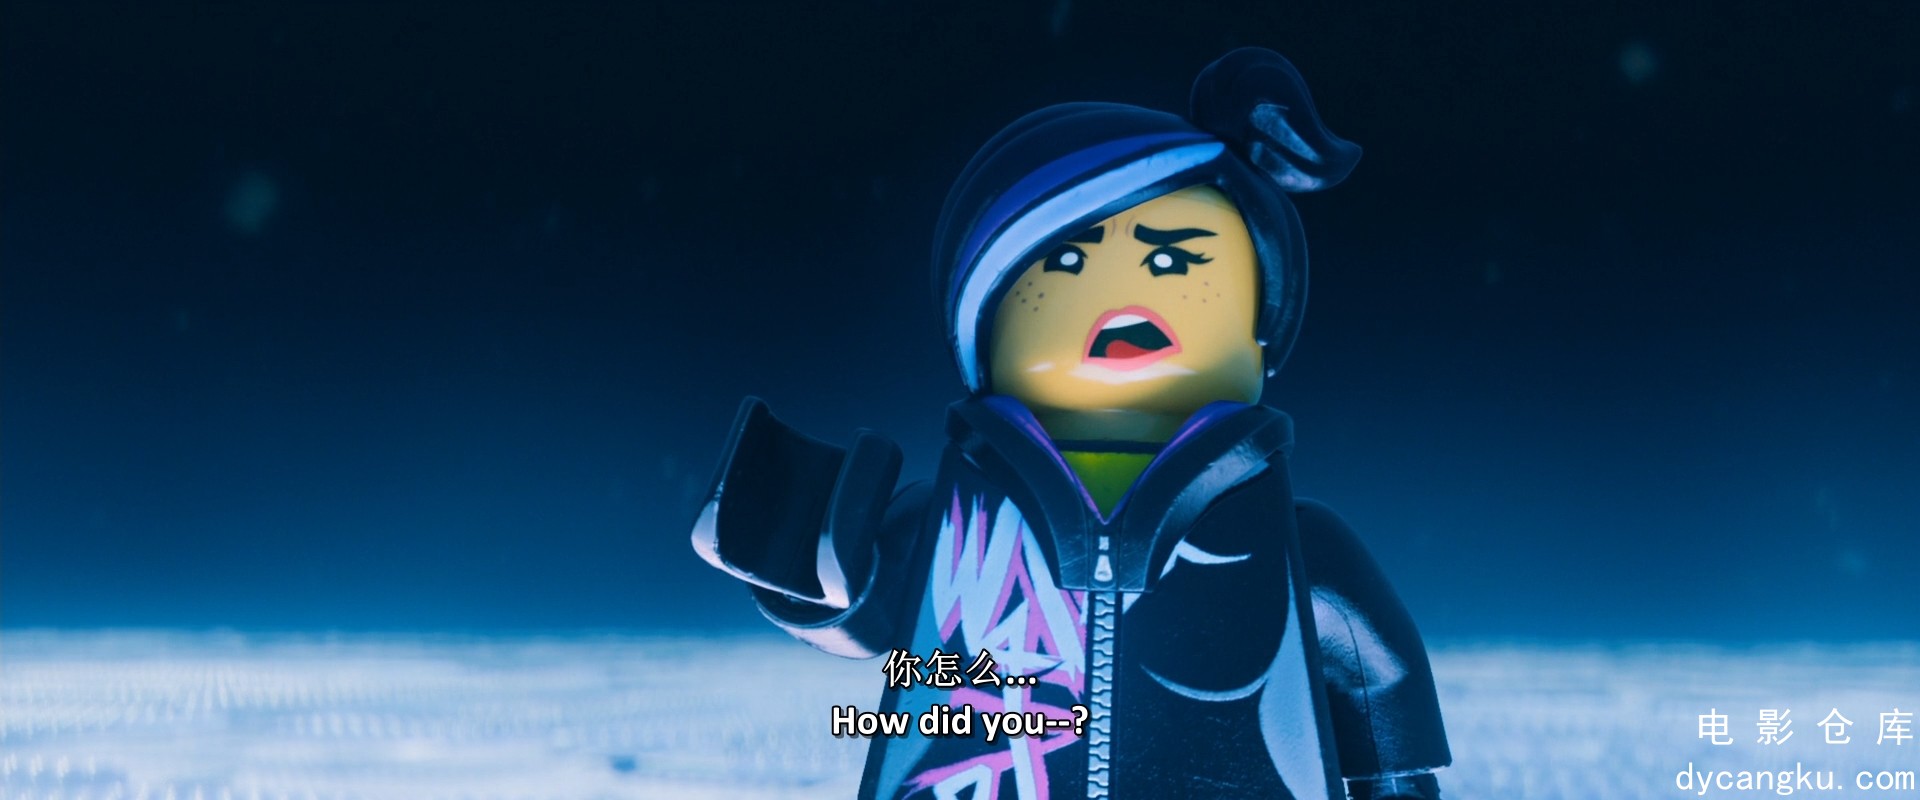 [电影仓库dycangku.com]The.Lego.Movie.2014.1080p.BluRay.x264.DTS.mkv_snapshot_00..jpg